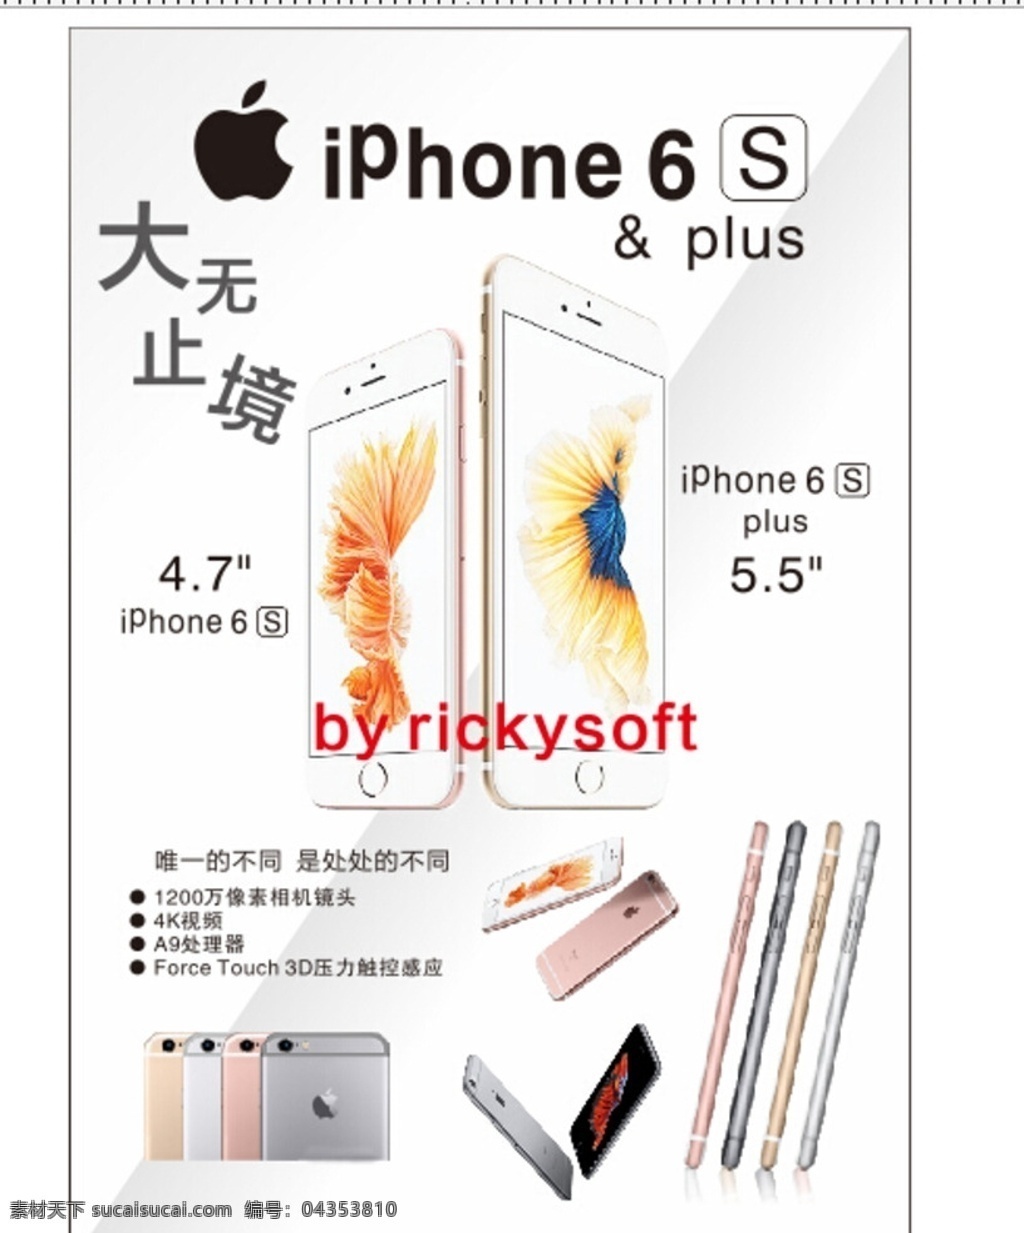 iphone6s 广告 iphone6splus 6s plus 6splus 苹果6s 苹果6 苹果 苹果手机 果6s